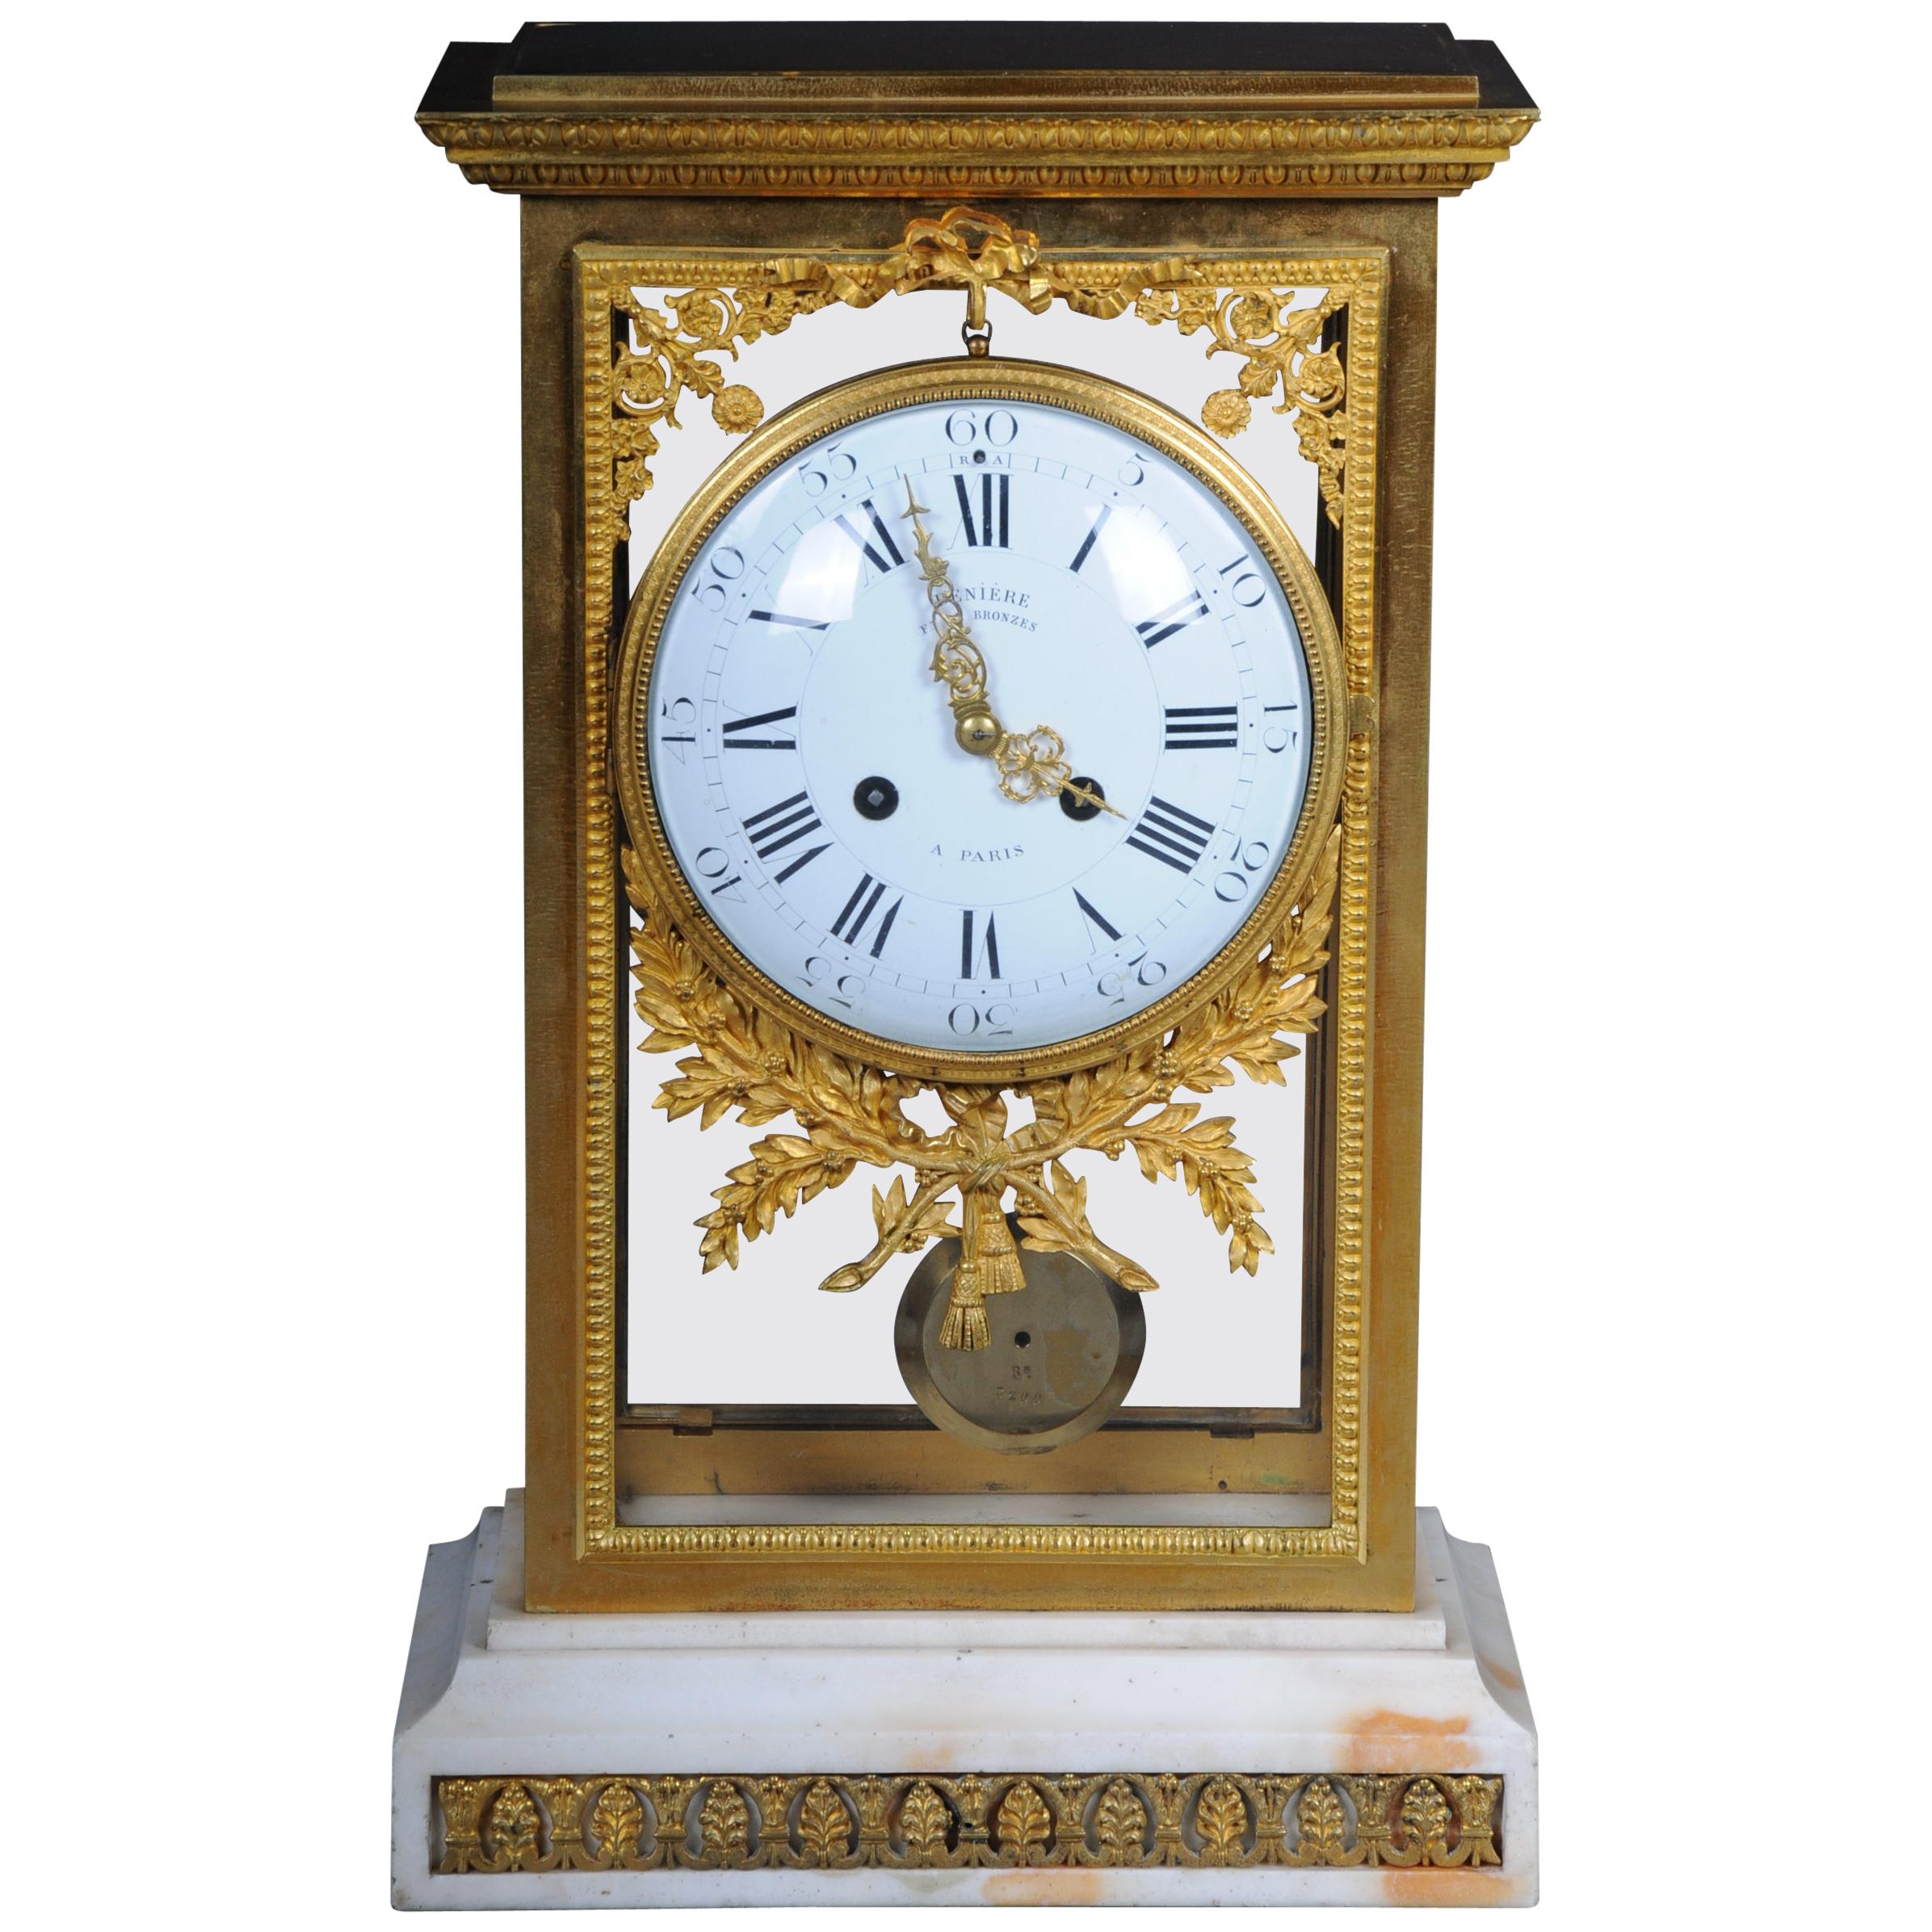 Antique French Mantelpiece / Clock, Deniere a Paris, circa 1880